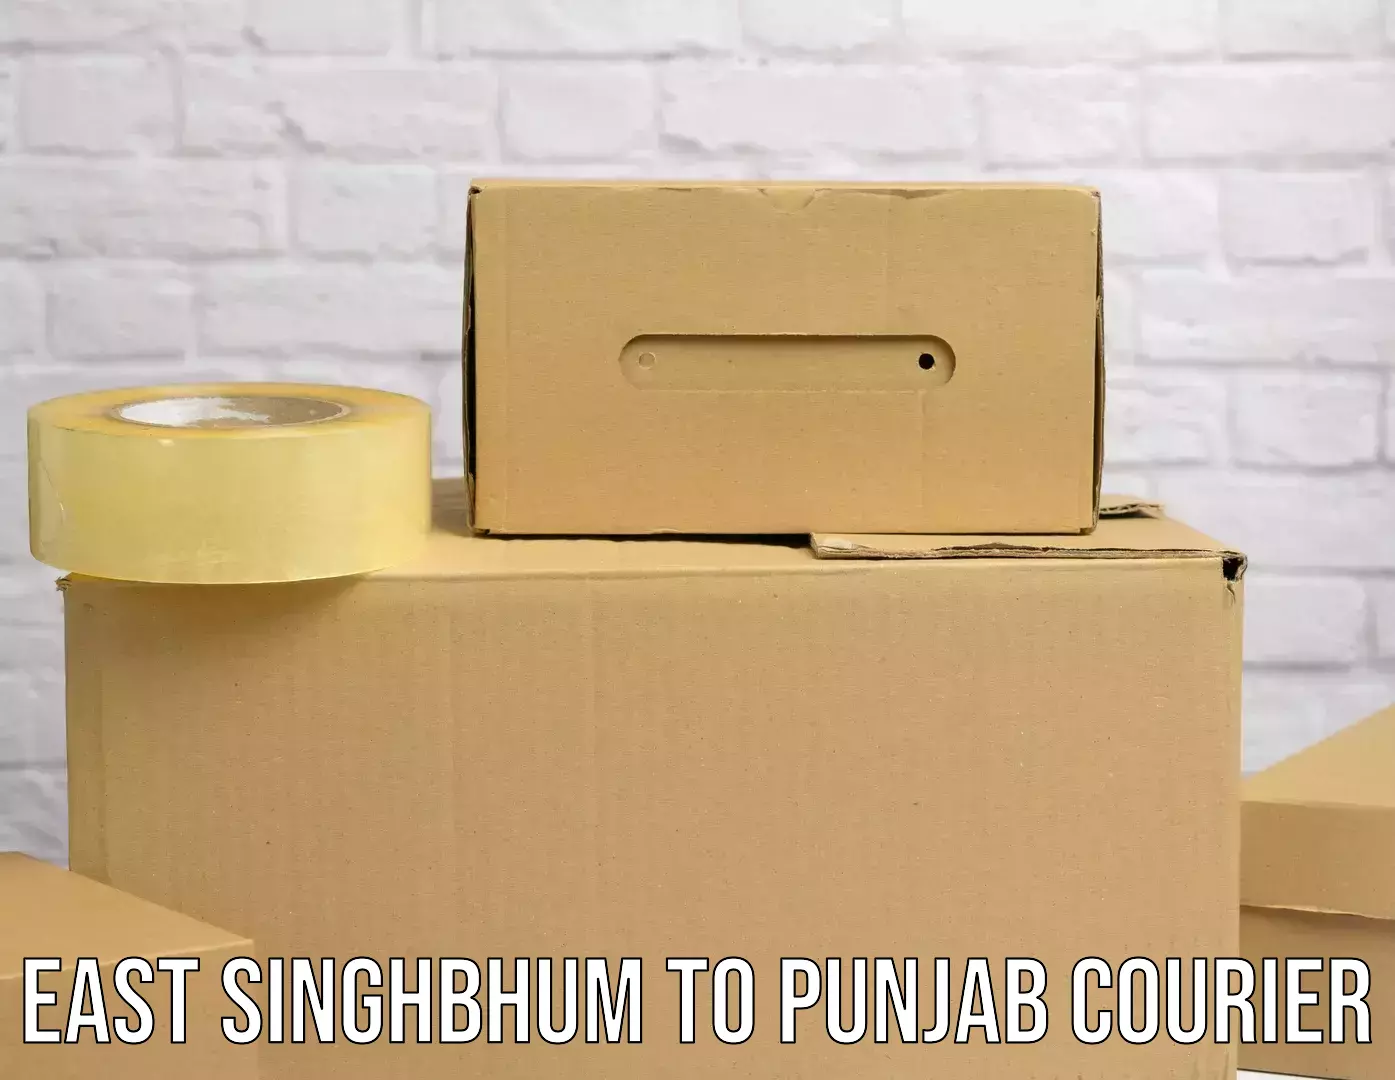 Affordable parcel service East Singhbhum to Phagwara